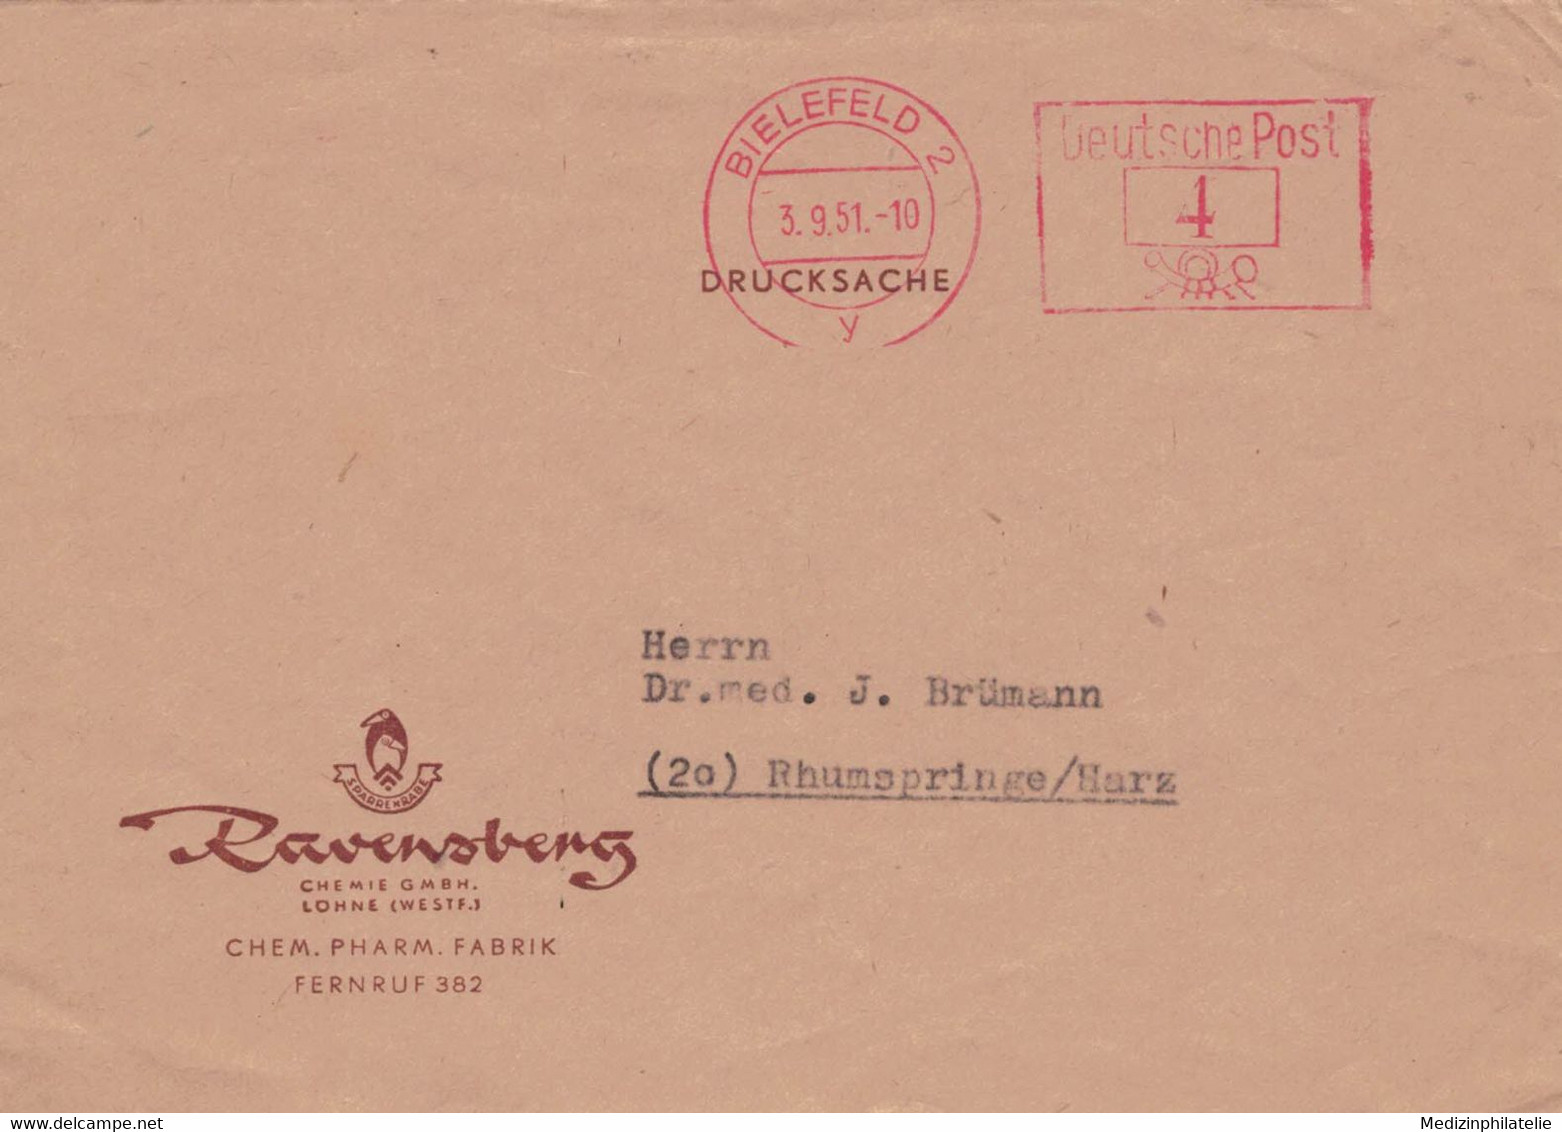 Sparrenrabe Ravensberg Chemie Löhne - Bielefeld 1951 Y - Pharmacy